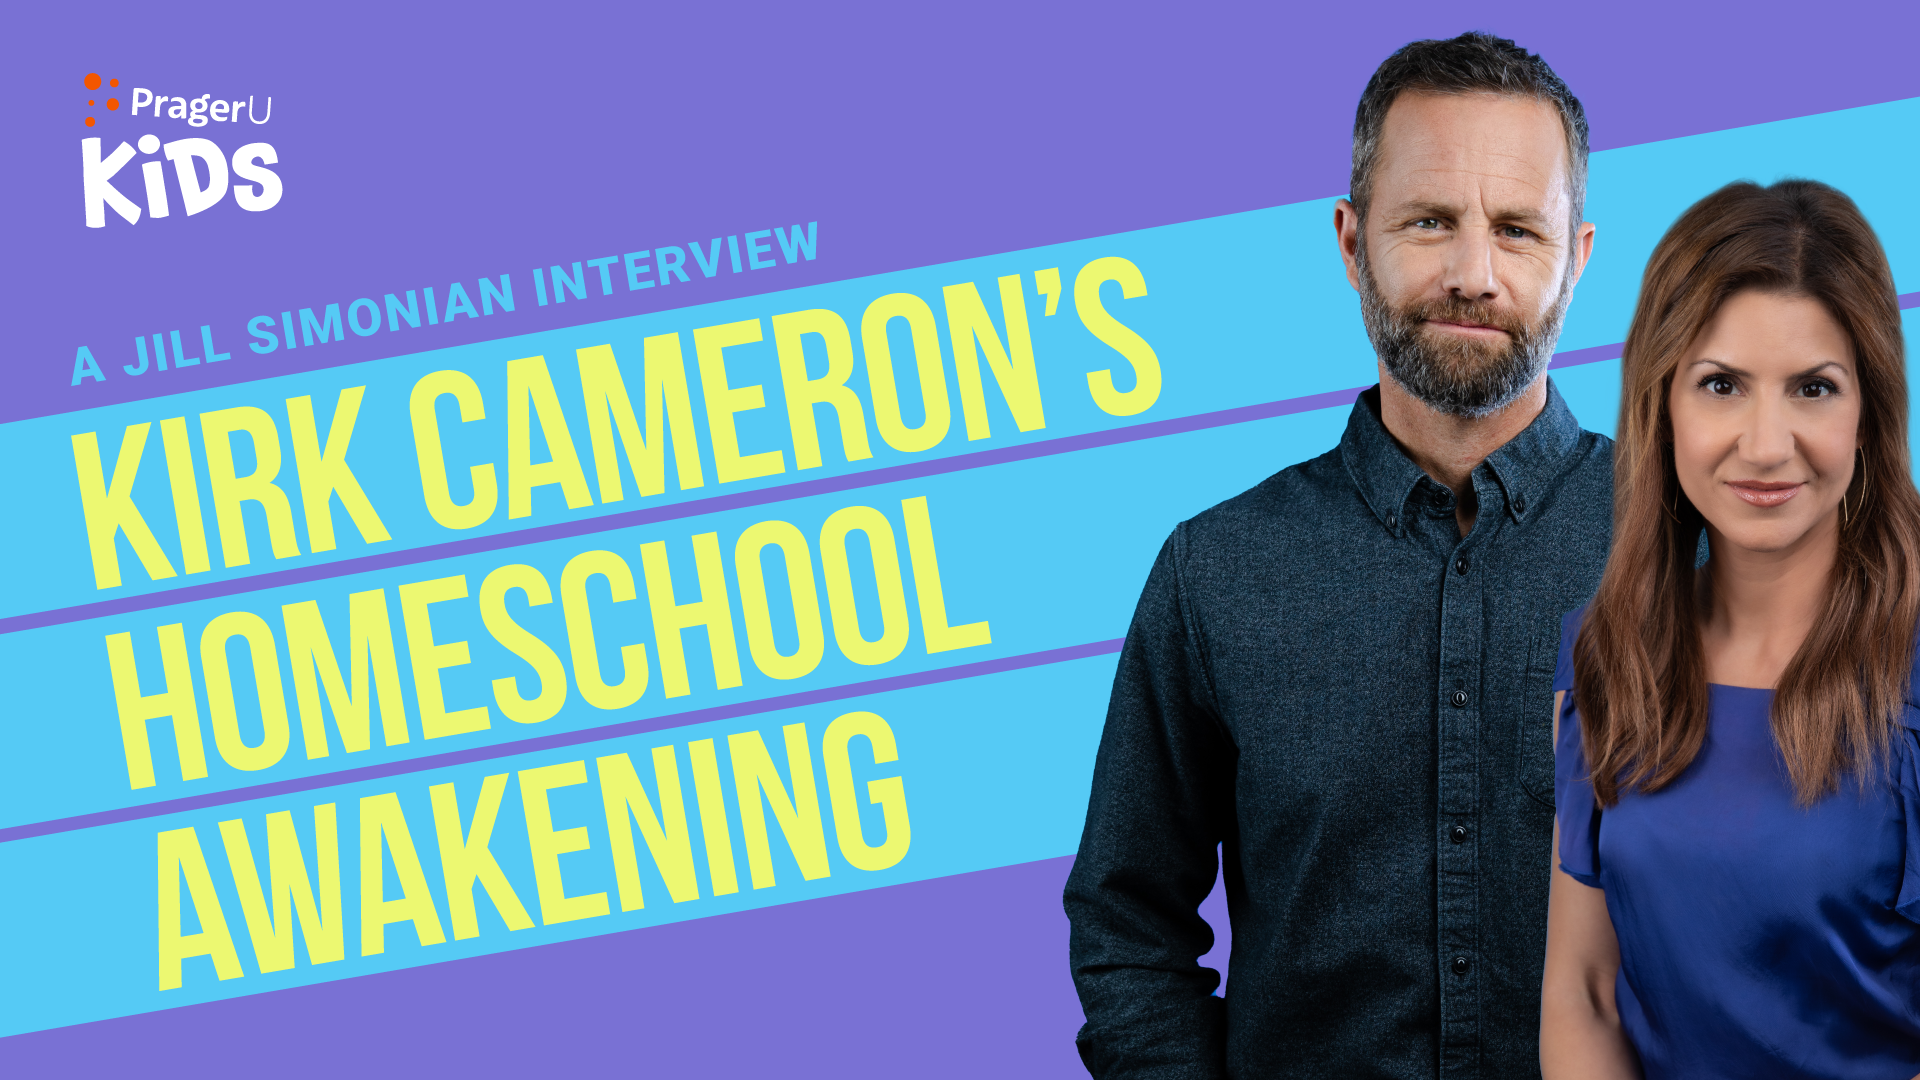 Kirk Cameron's Homeschool Awakening